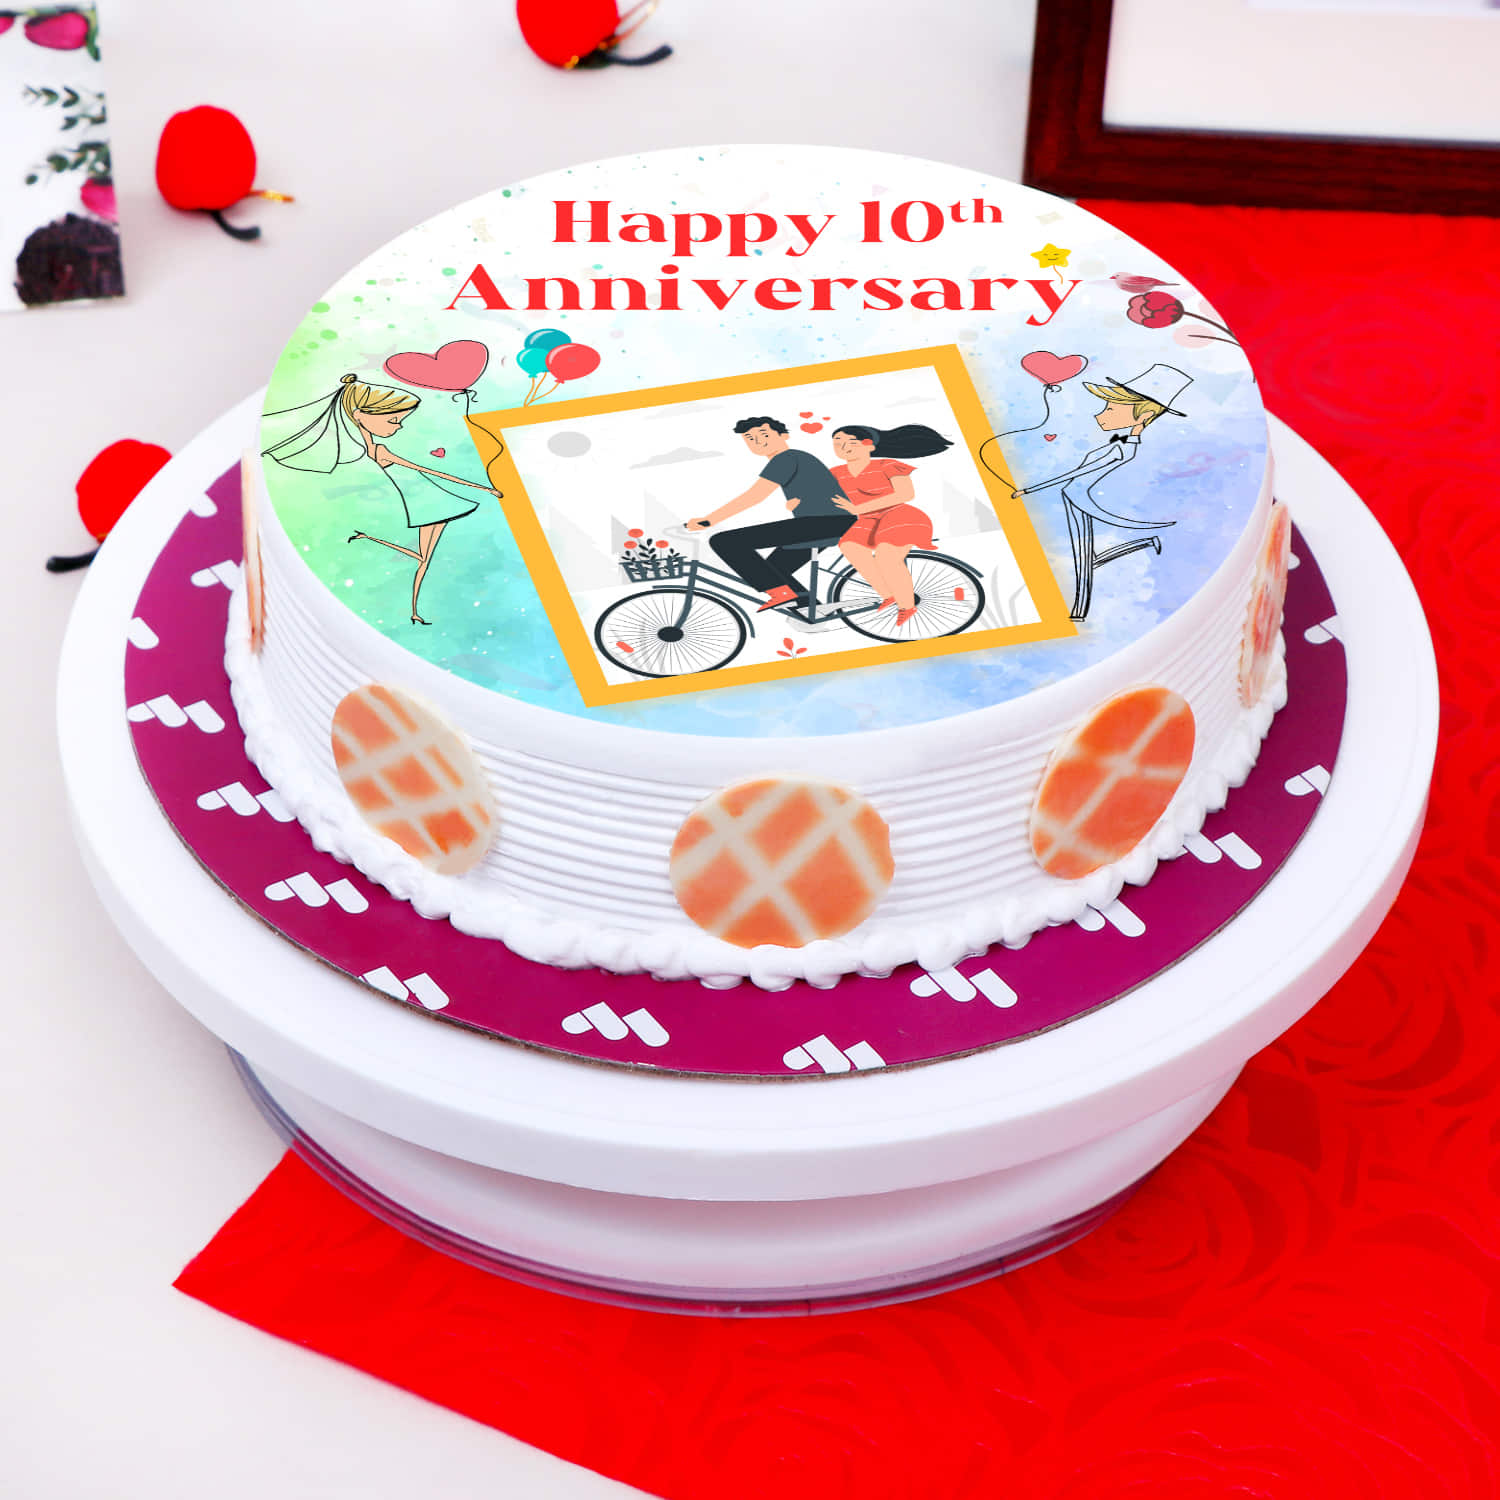 25th wedding anniversary - Decorated Cake by Paula Rebelo - CakesDecor